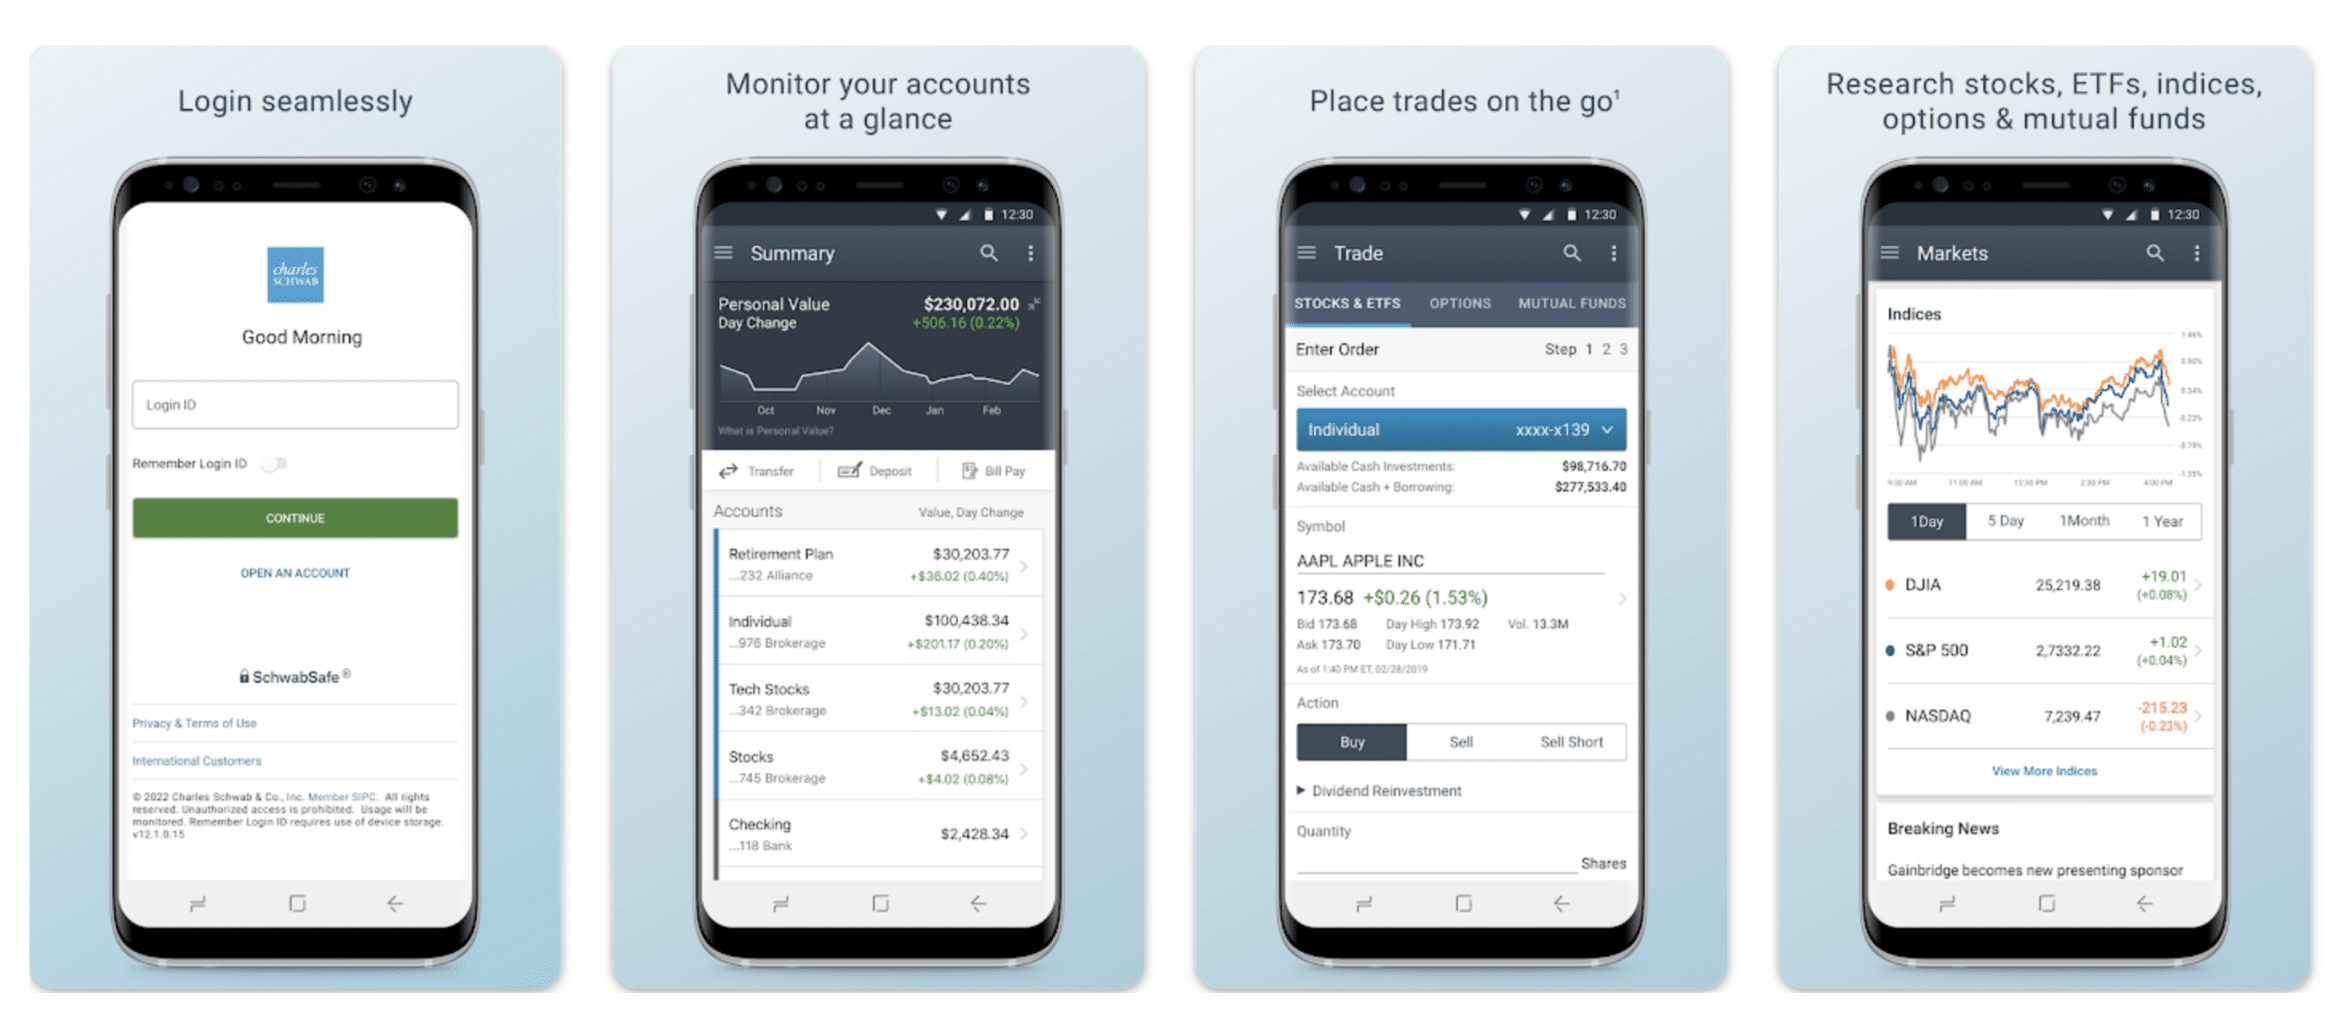 Schwab mobile stock trading app interface